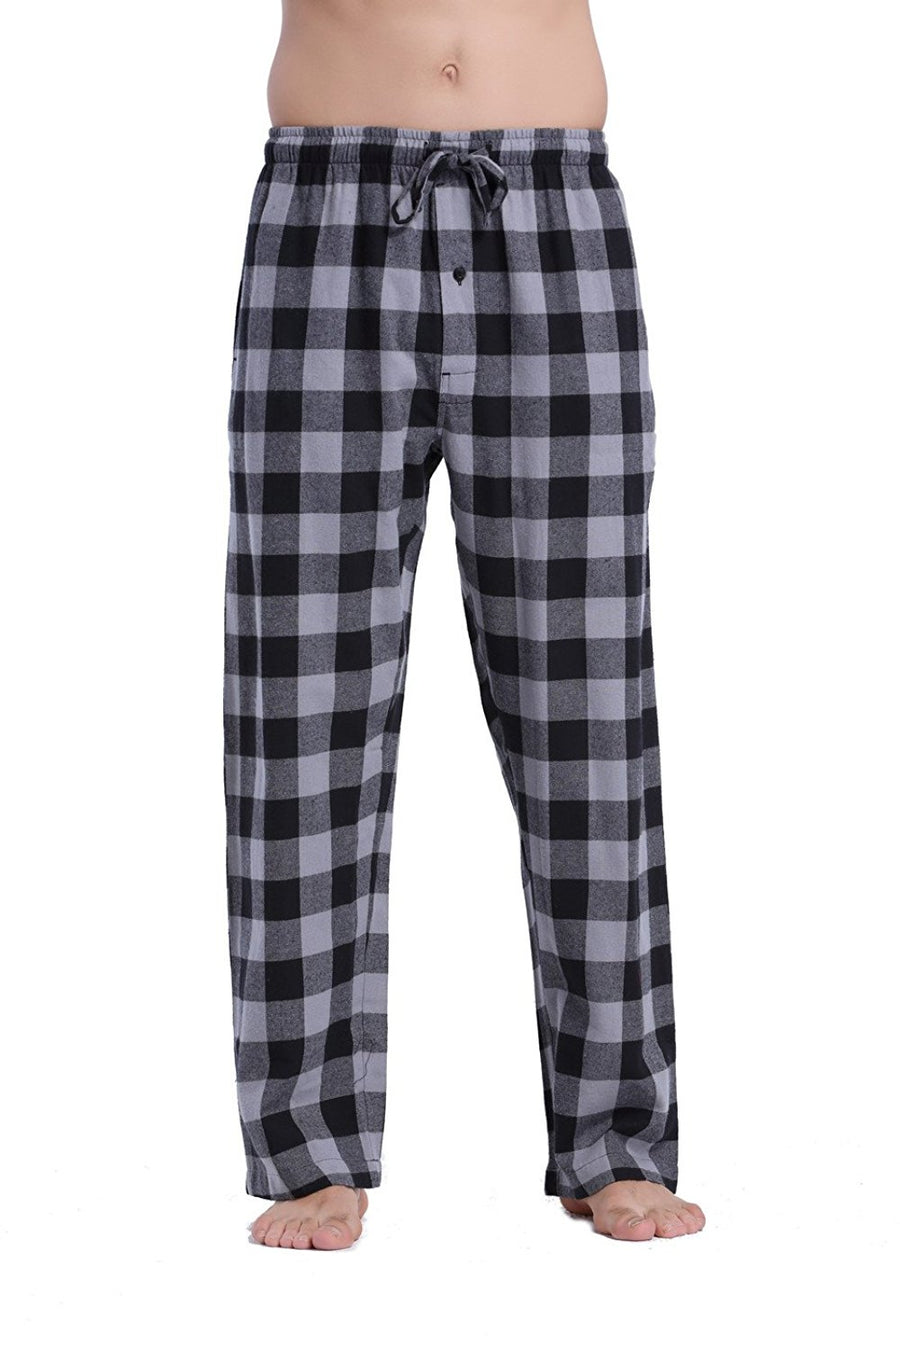  YUSHOW Mens Flannel Pajamas Set Cotton Plaid Pjs Button Down  Warm Soft Lounge Sleepwear Top & Pj Pants